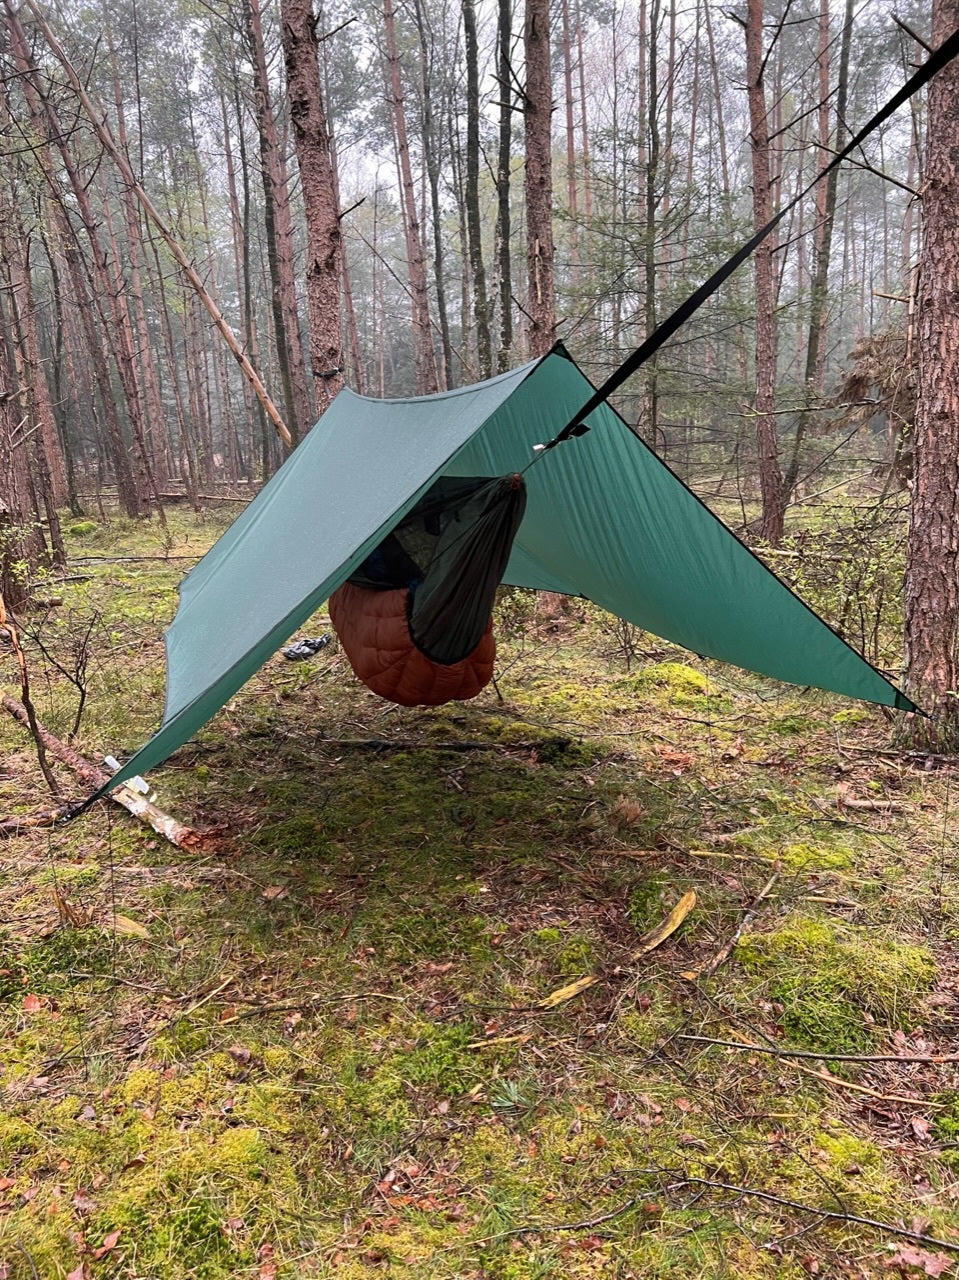 hammock with green tarp and orange underquilt ultralight camping hammock custom made dream hammock with bugnet or mosquito net best